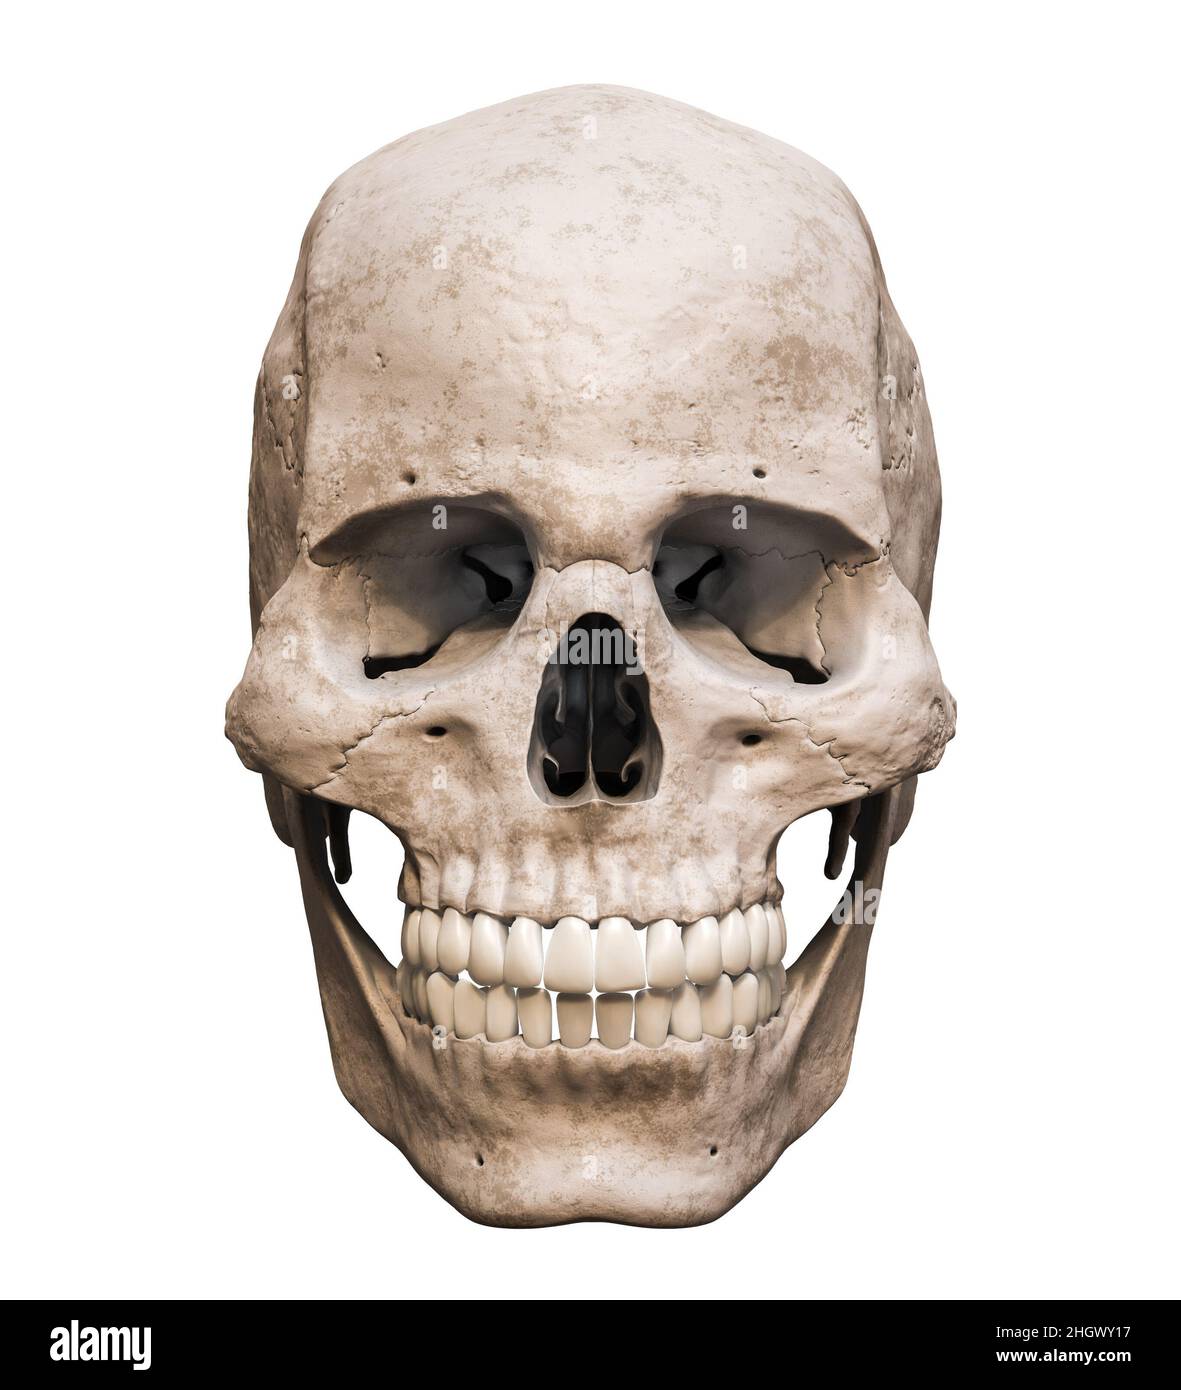 Homo sapiens cráneo masculino anatómicamente precisa vista anterior o frontal aislada sobre fondo blanco con espacio de copia 3D representación de la ilustración. ana humana Foto de stock